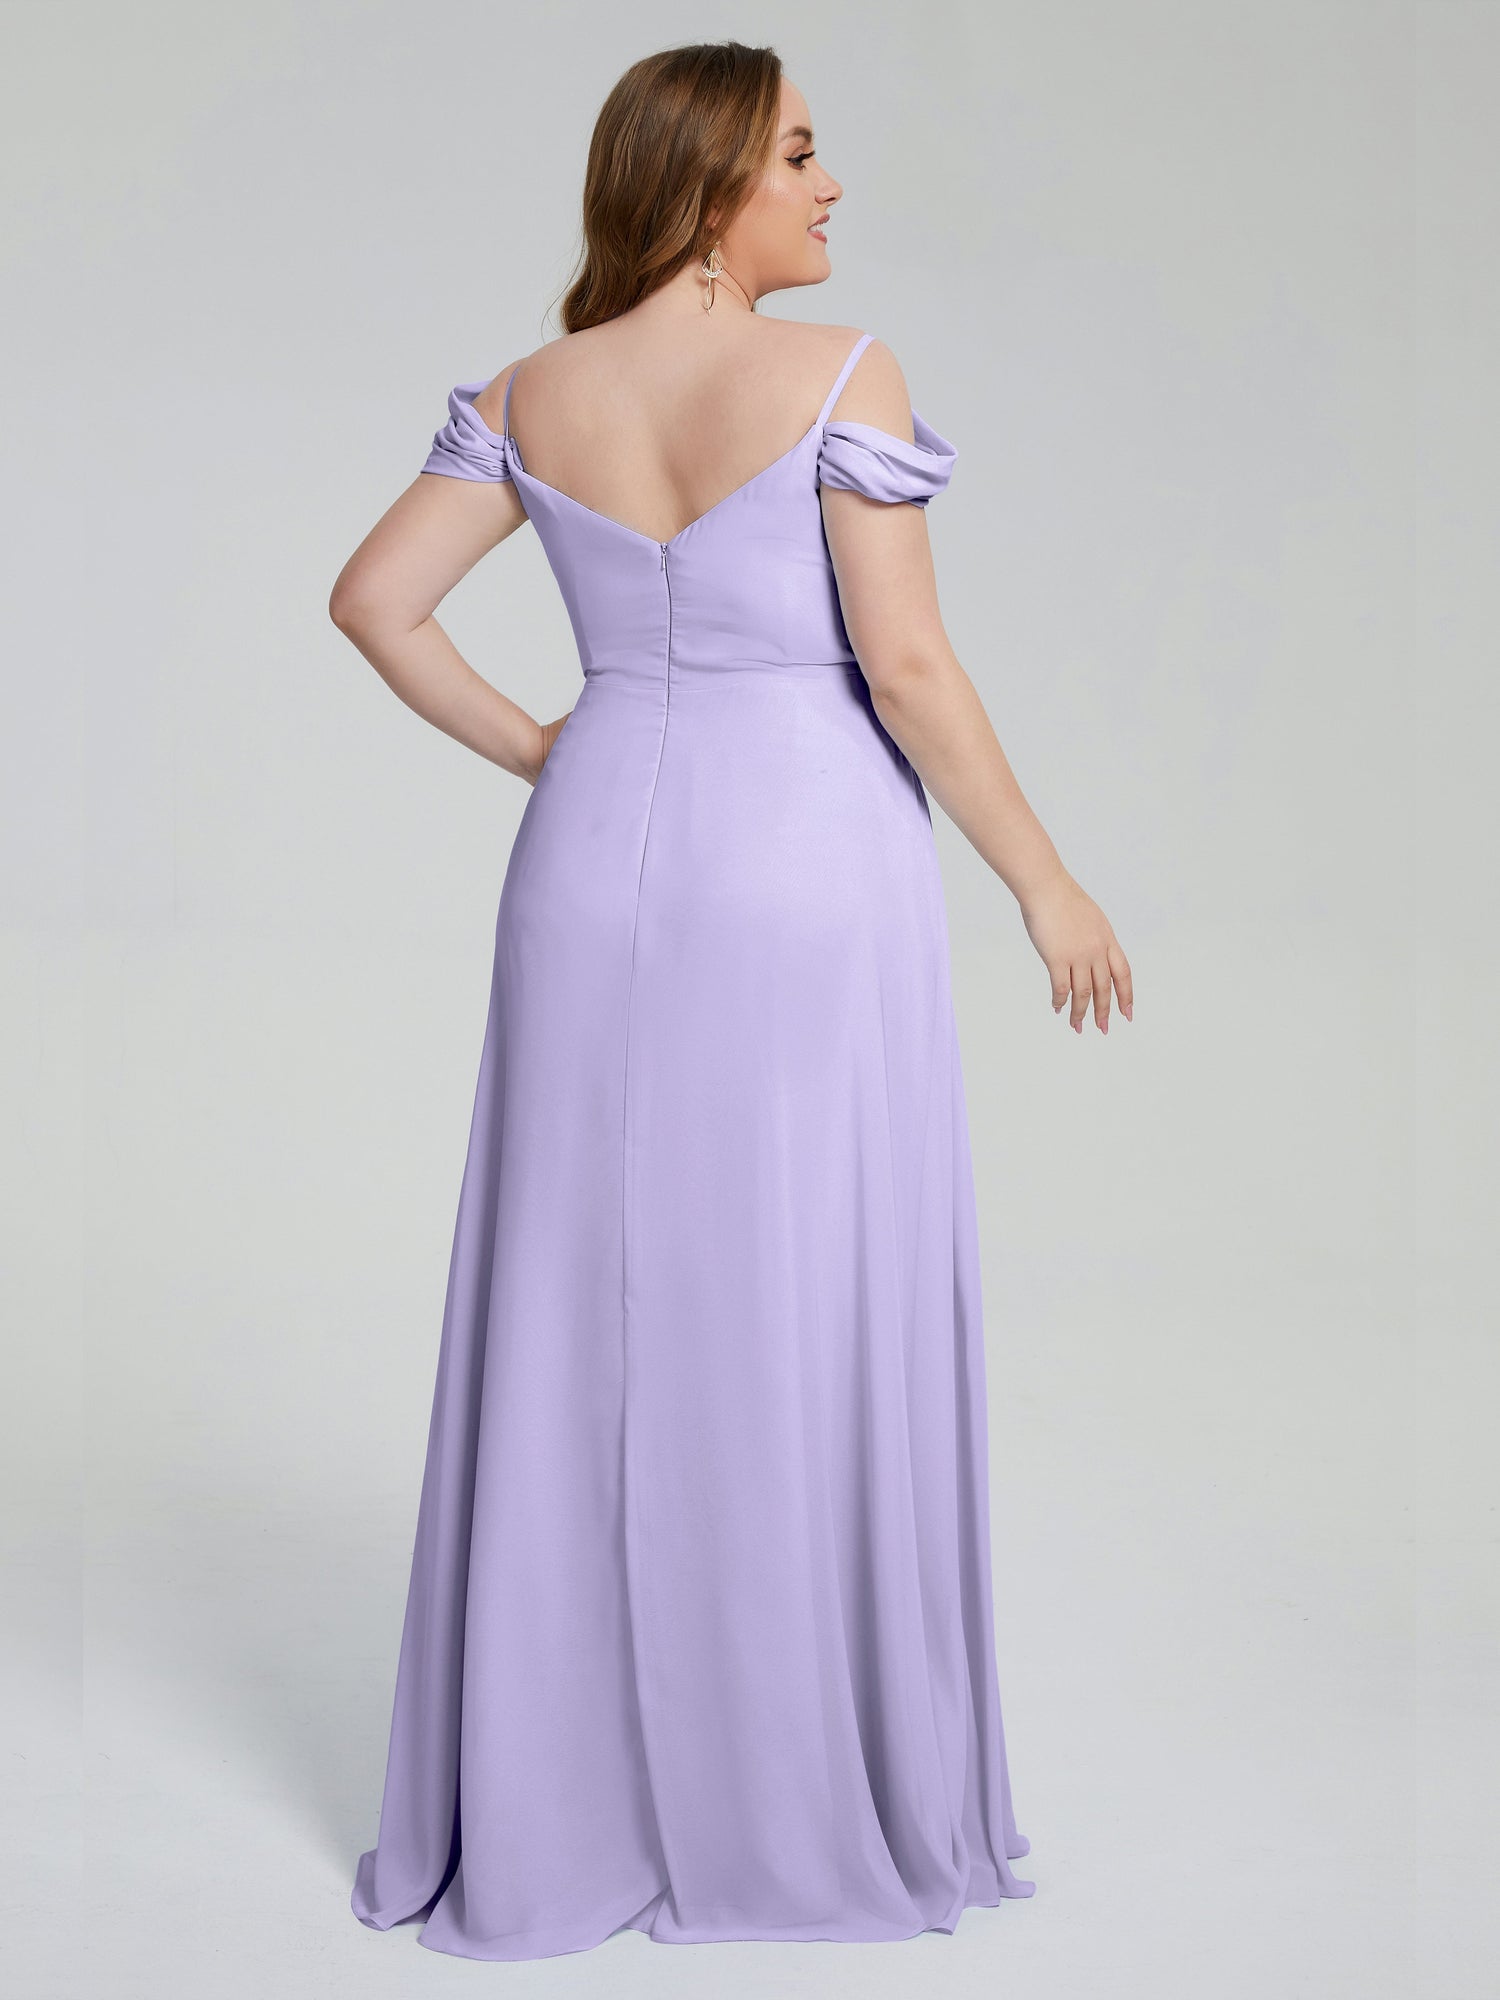 purple bridesmaid dresses | lavender bridesmaid dresses | mismatched bridesmaid  dress… | Lavender bridesmaid dresses, Purple bridesmaid dresses, Bridesmaid  colors